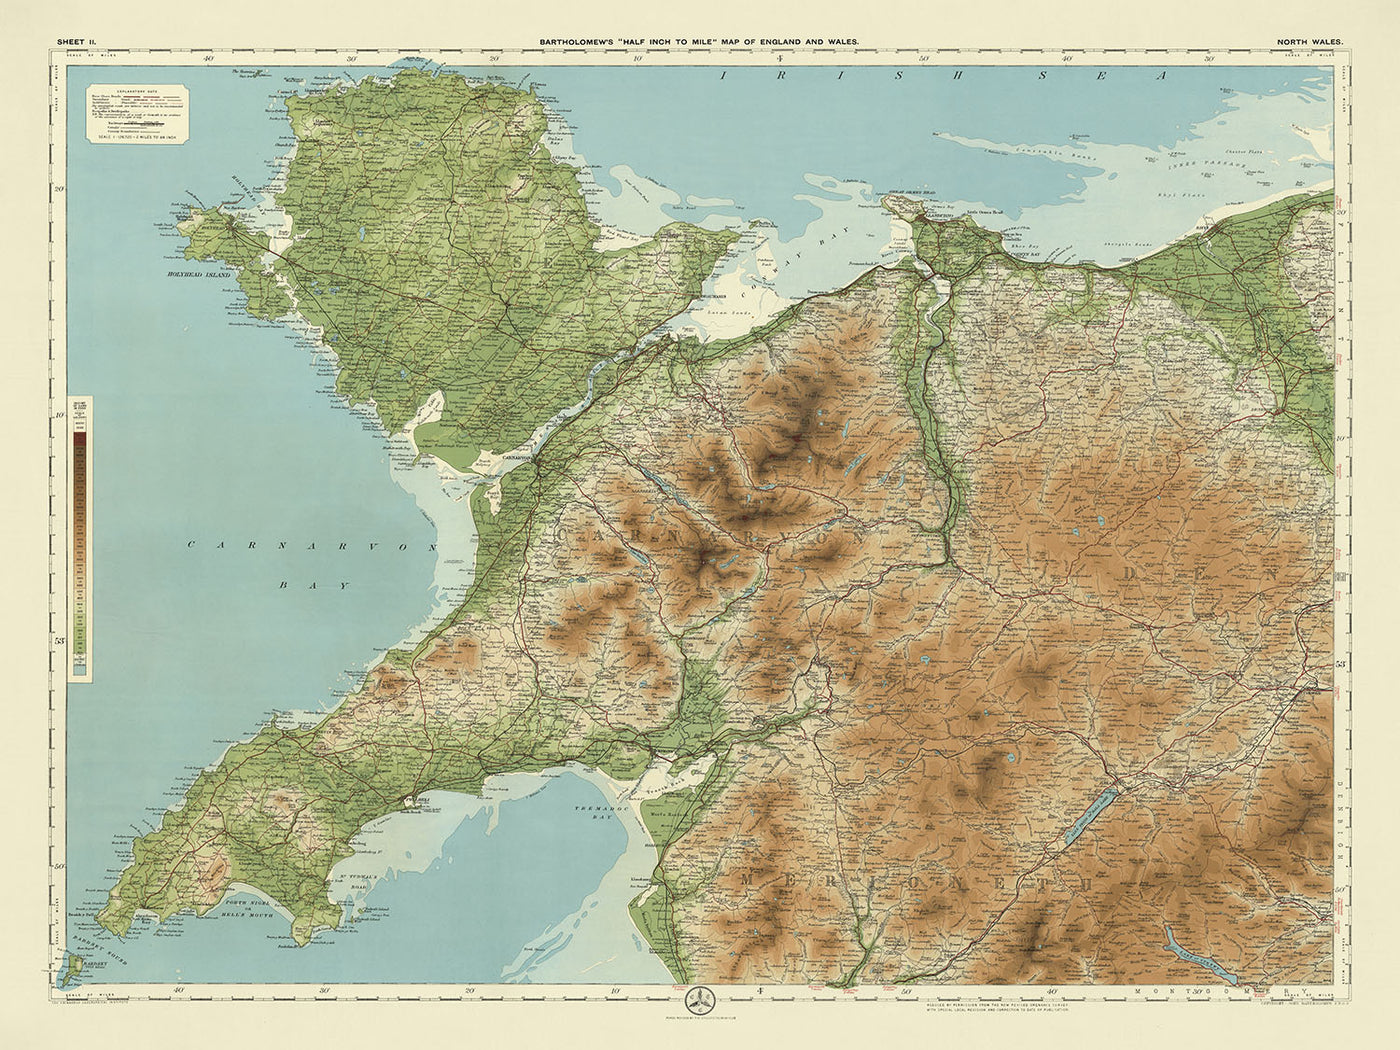 Old OS Map of North Wales by Bartholomew, 1901: Snowdon, Caernarfon, Llandudno, Menai Strait, Conwy, Anglesey